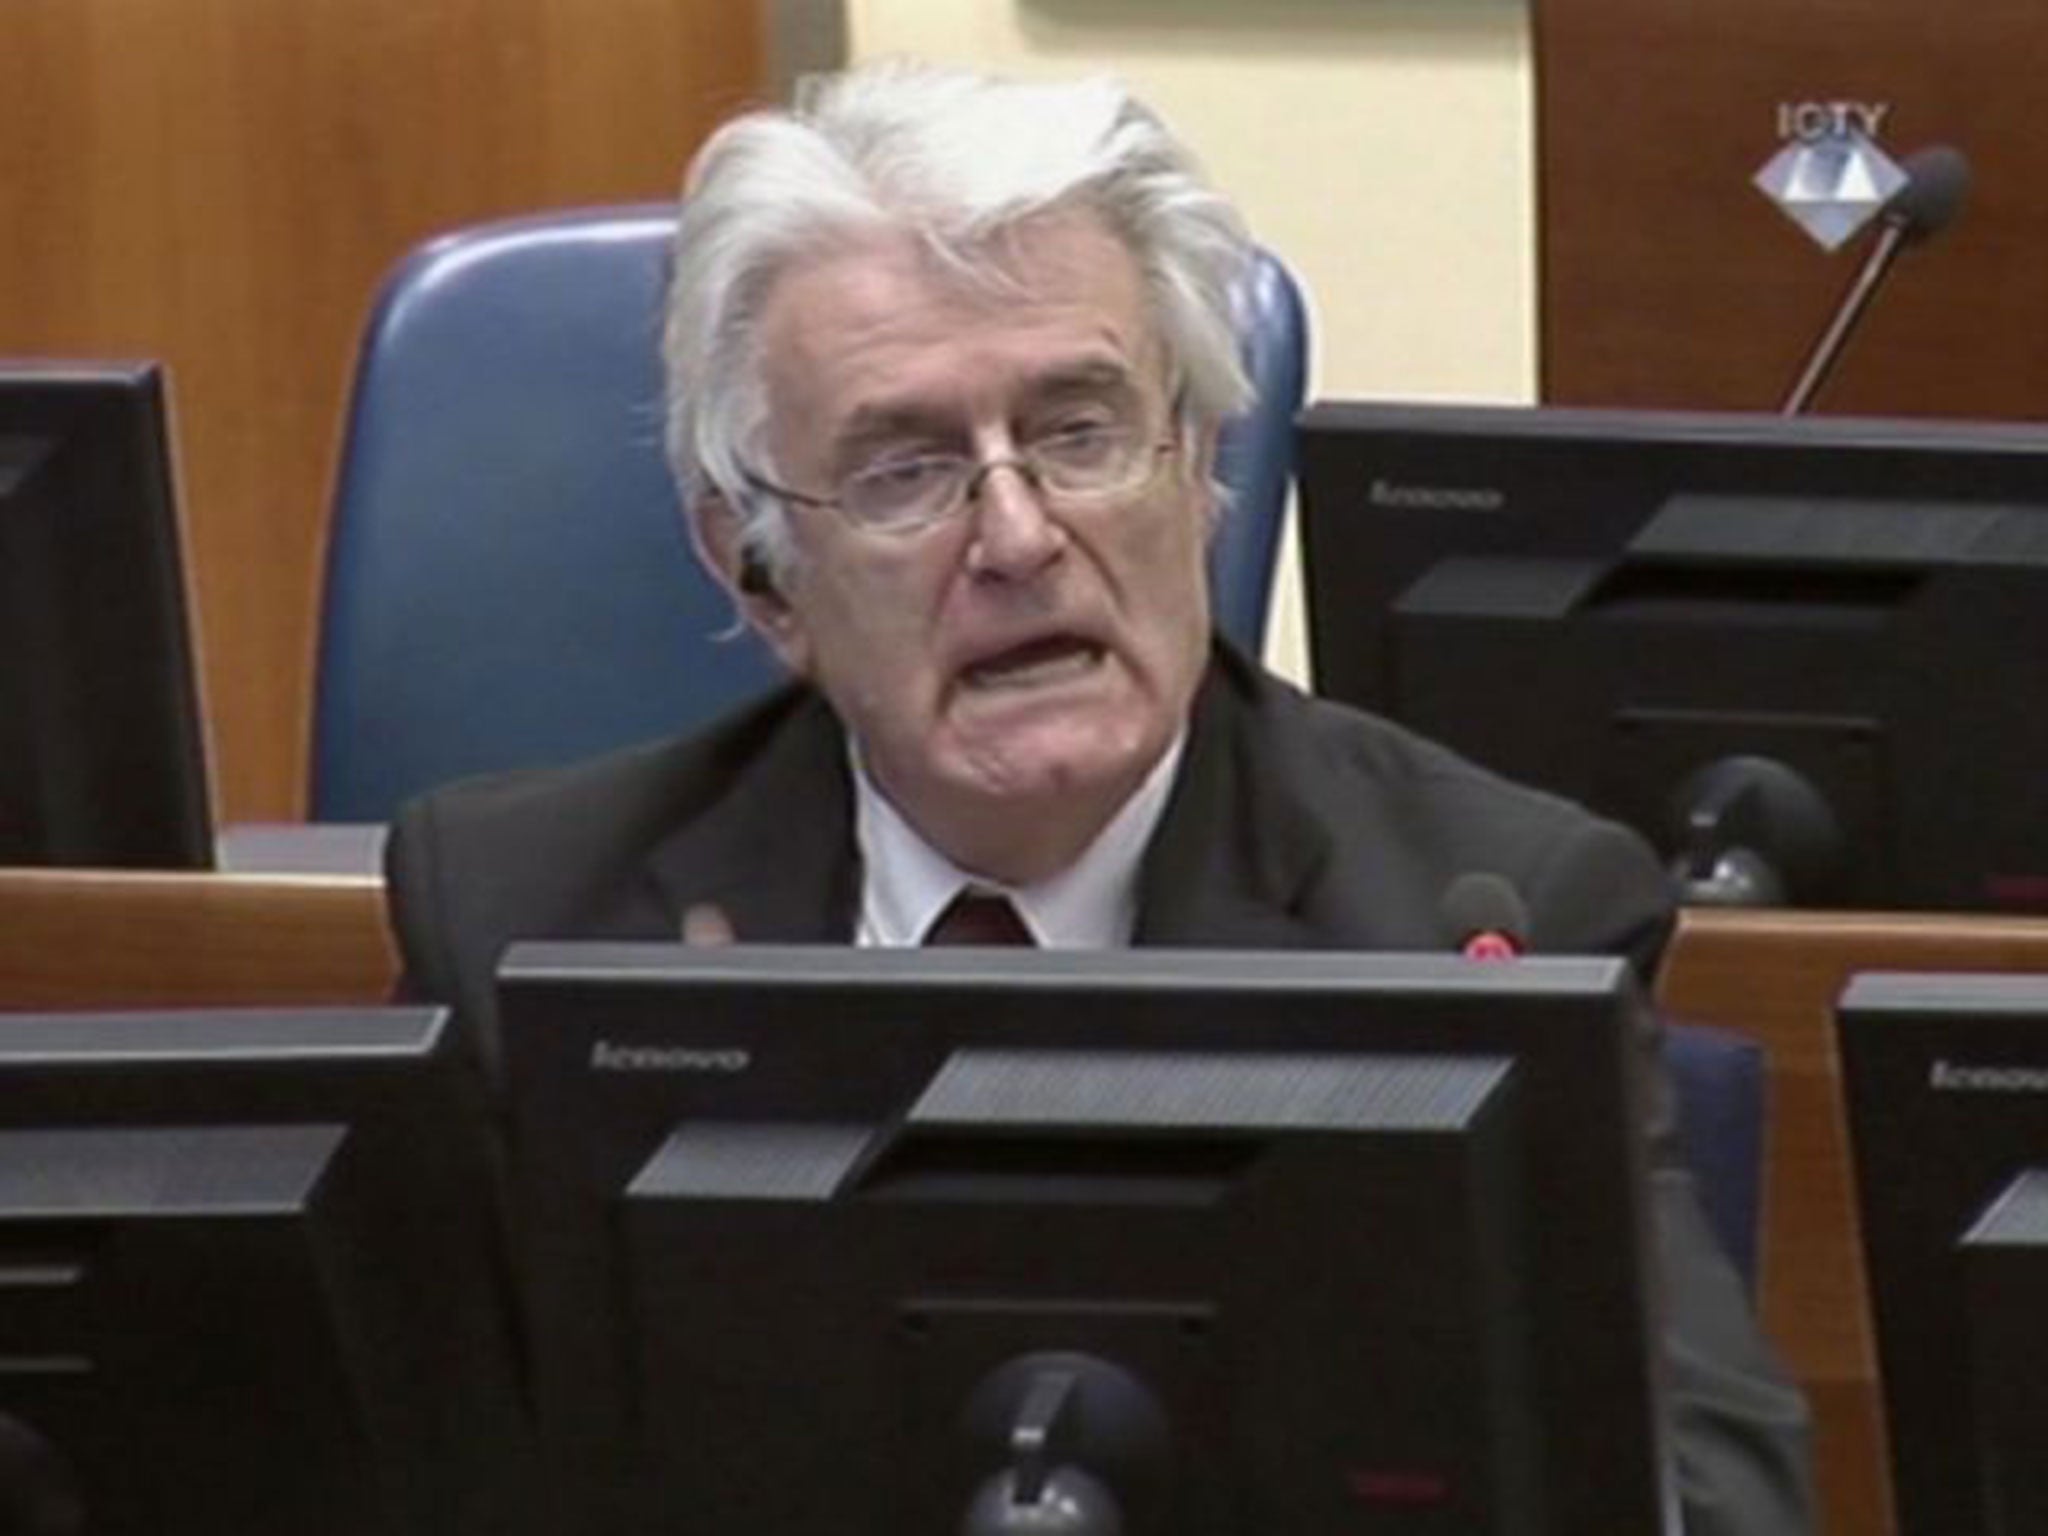 The former Bosnian Serb leader Radovan Karadzic at the UN war crimes tribunal on Tuesday